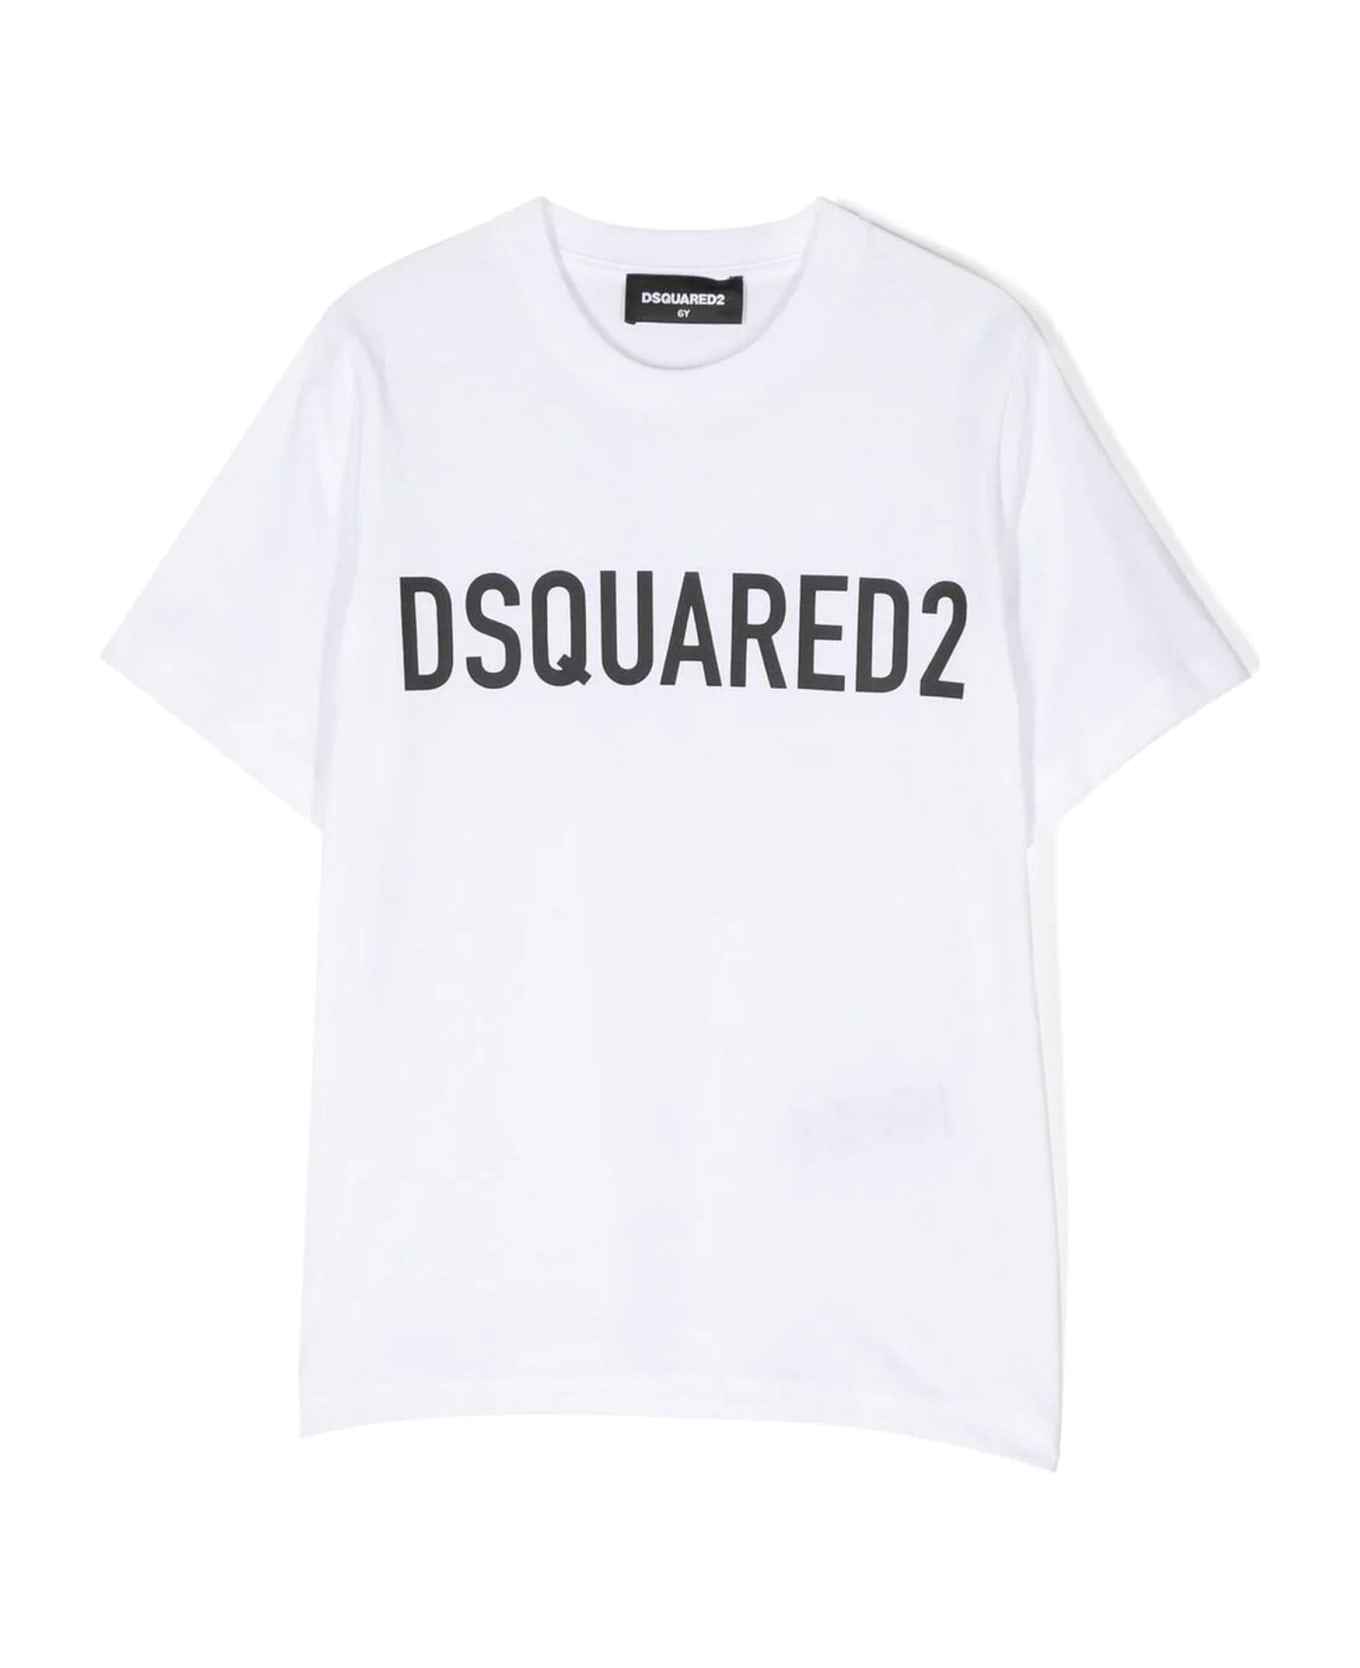 Dsquared2 White Cotton Tshirt - Bianco